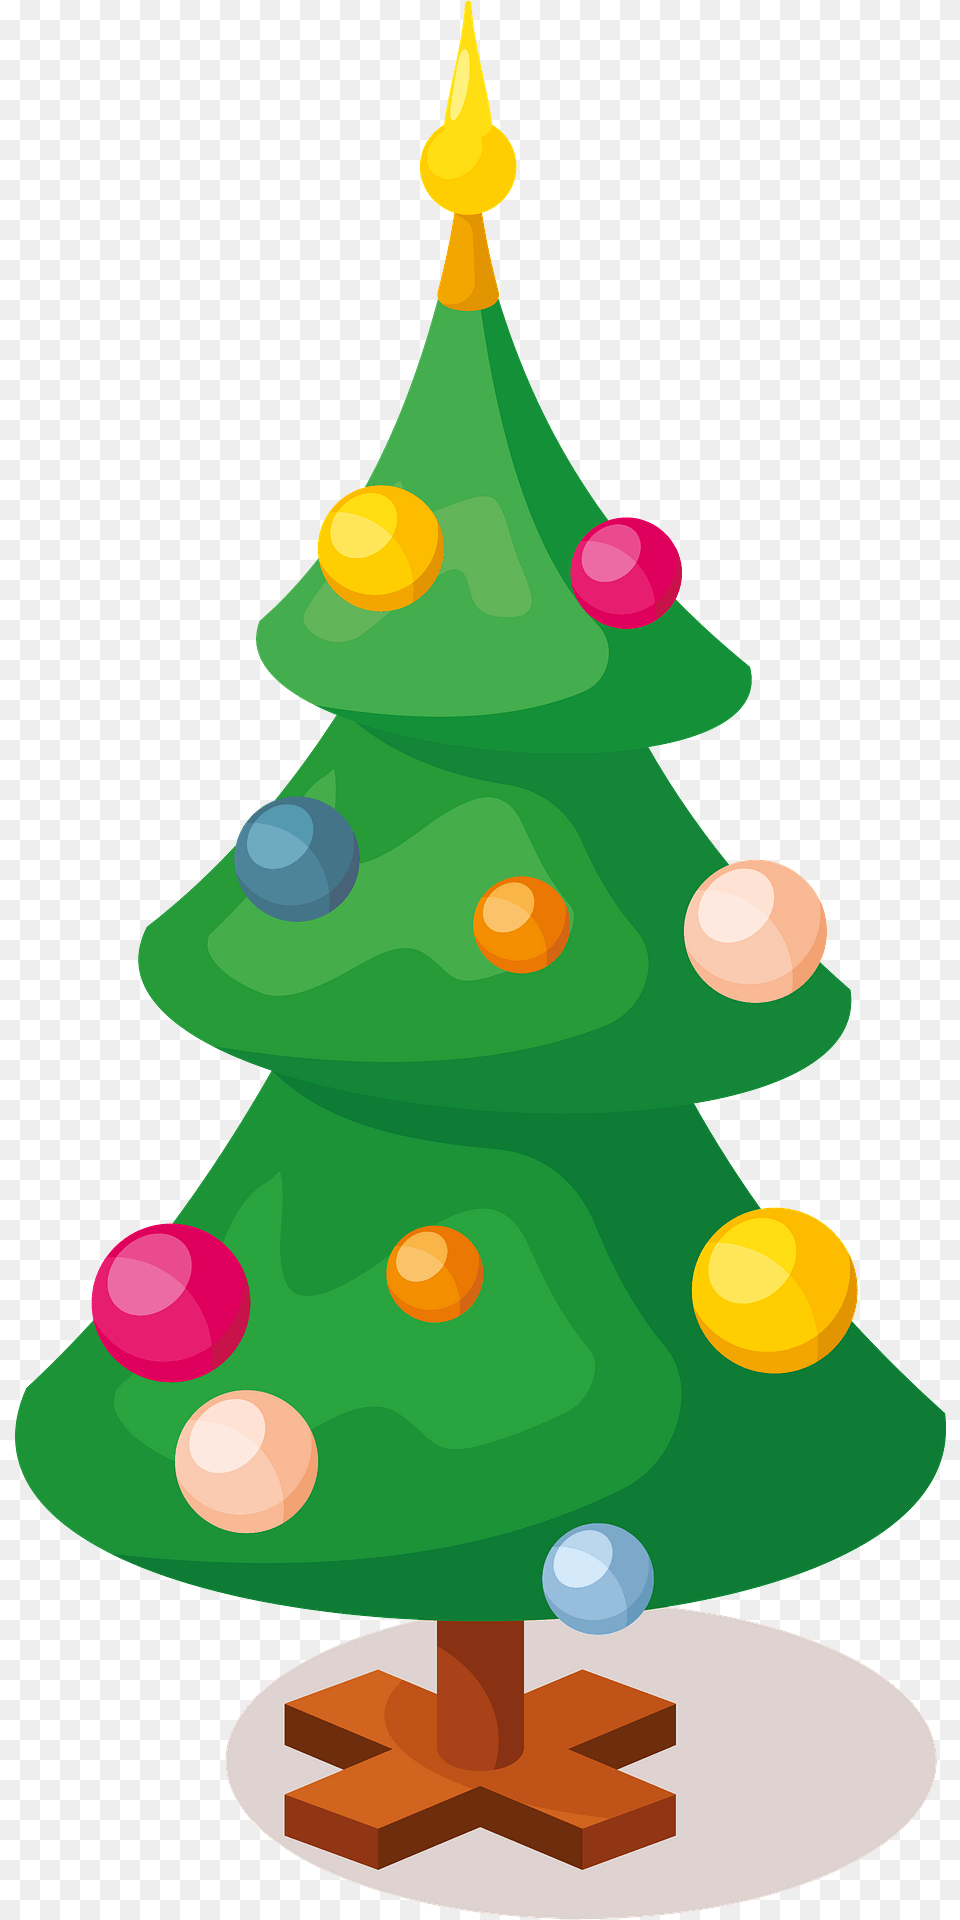 Christmas Tree Clipart, Christmas Decorations, Festival, Plant, Christmas Tree Png Image